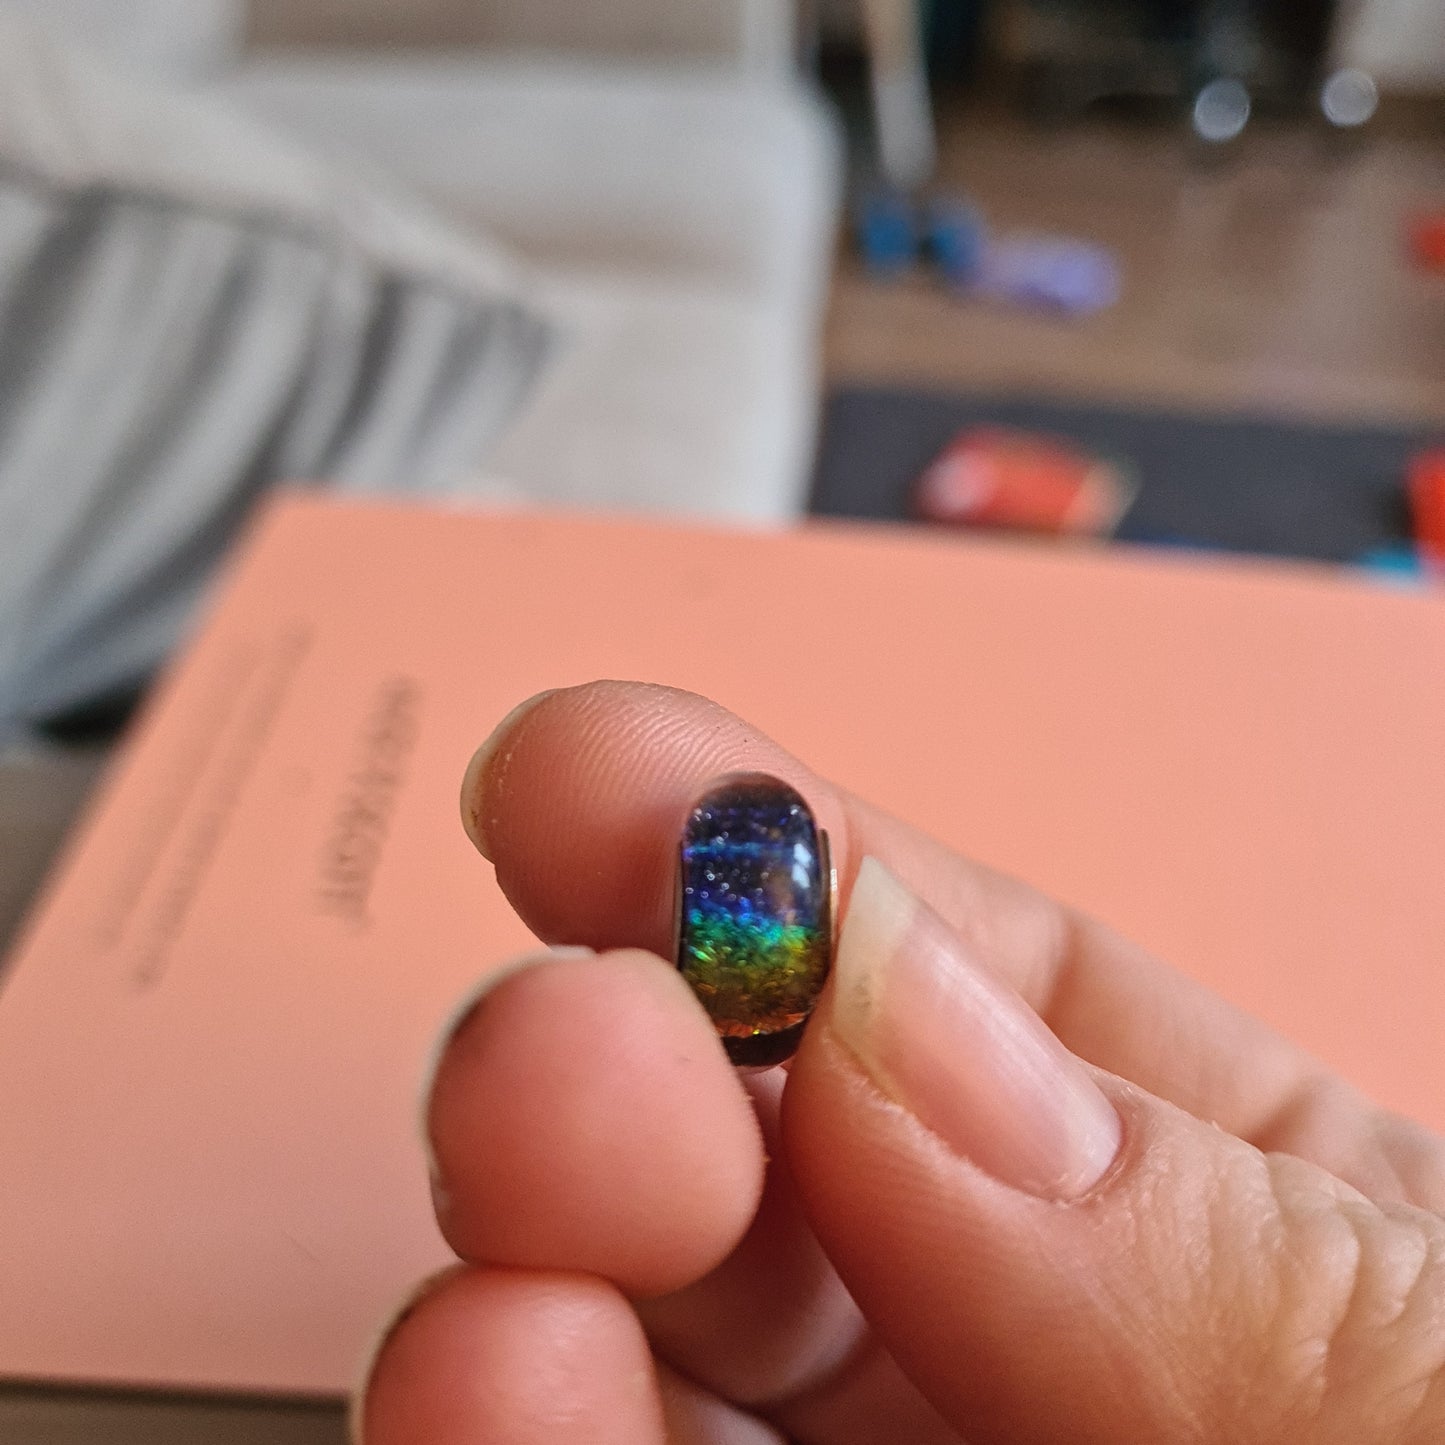 Genuine Chamilia Rainbow Shine Foil Beautiful Irresdecent Glass Charm